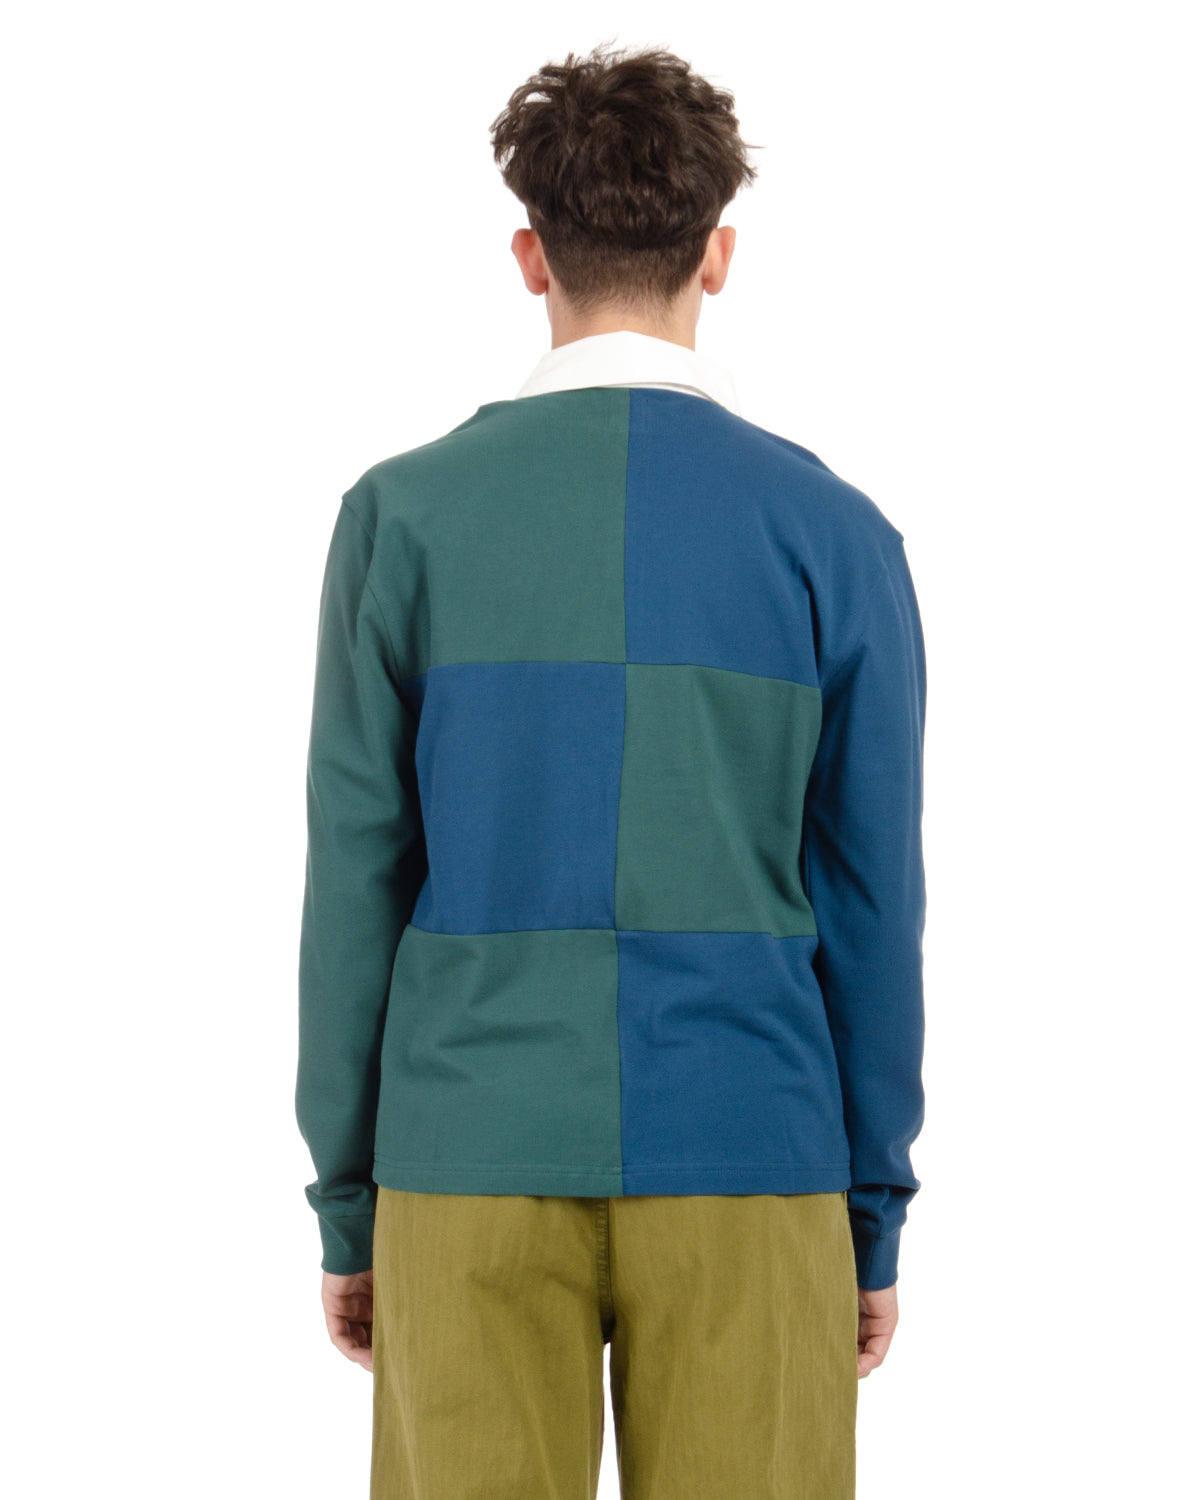 Paneled Rugby Shirt - Mallard Green 5